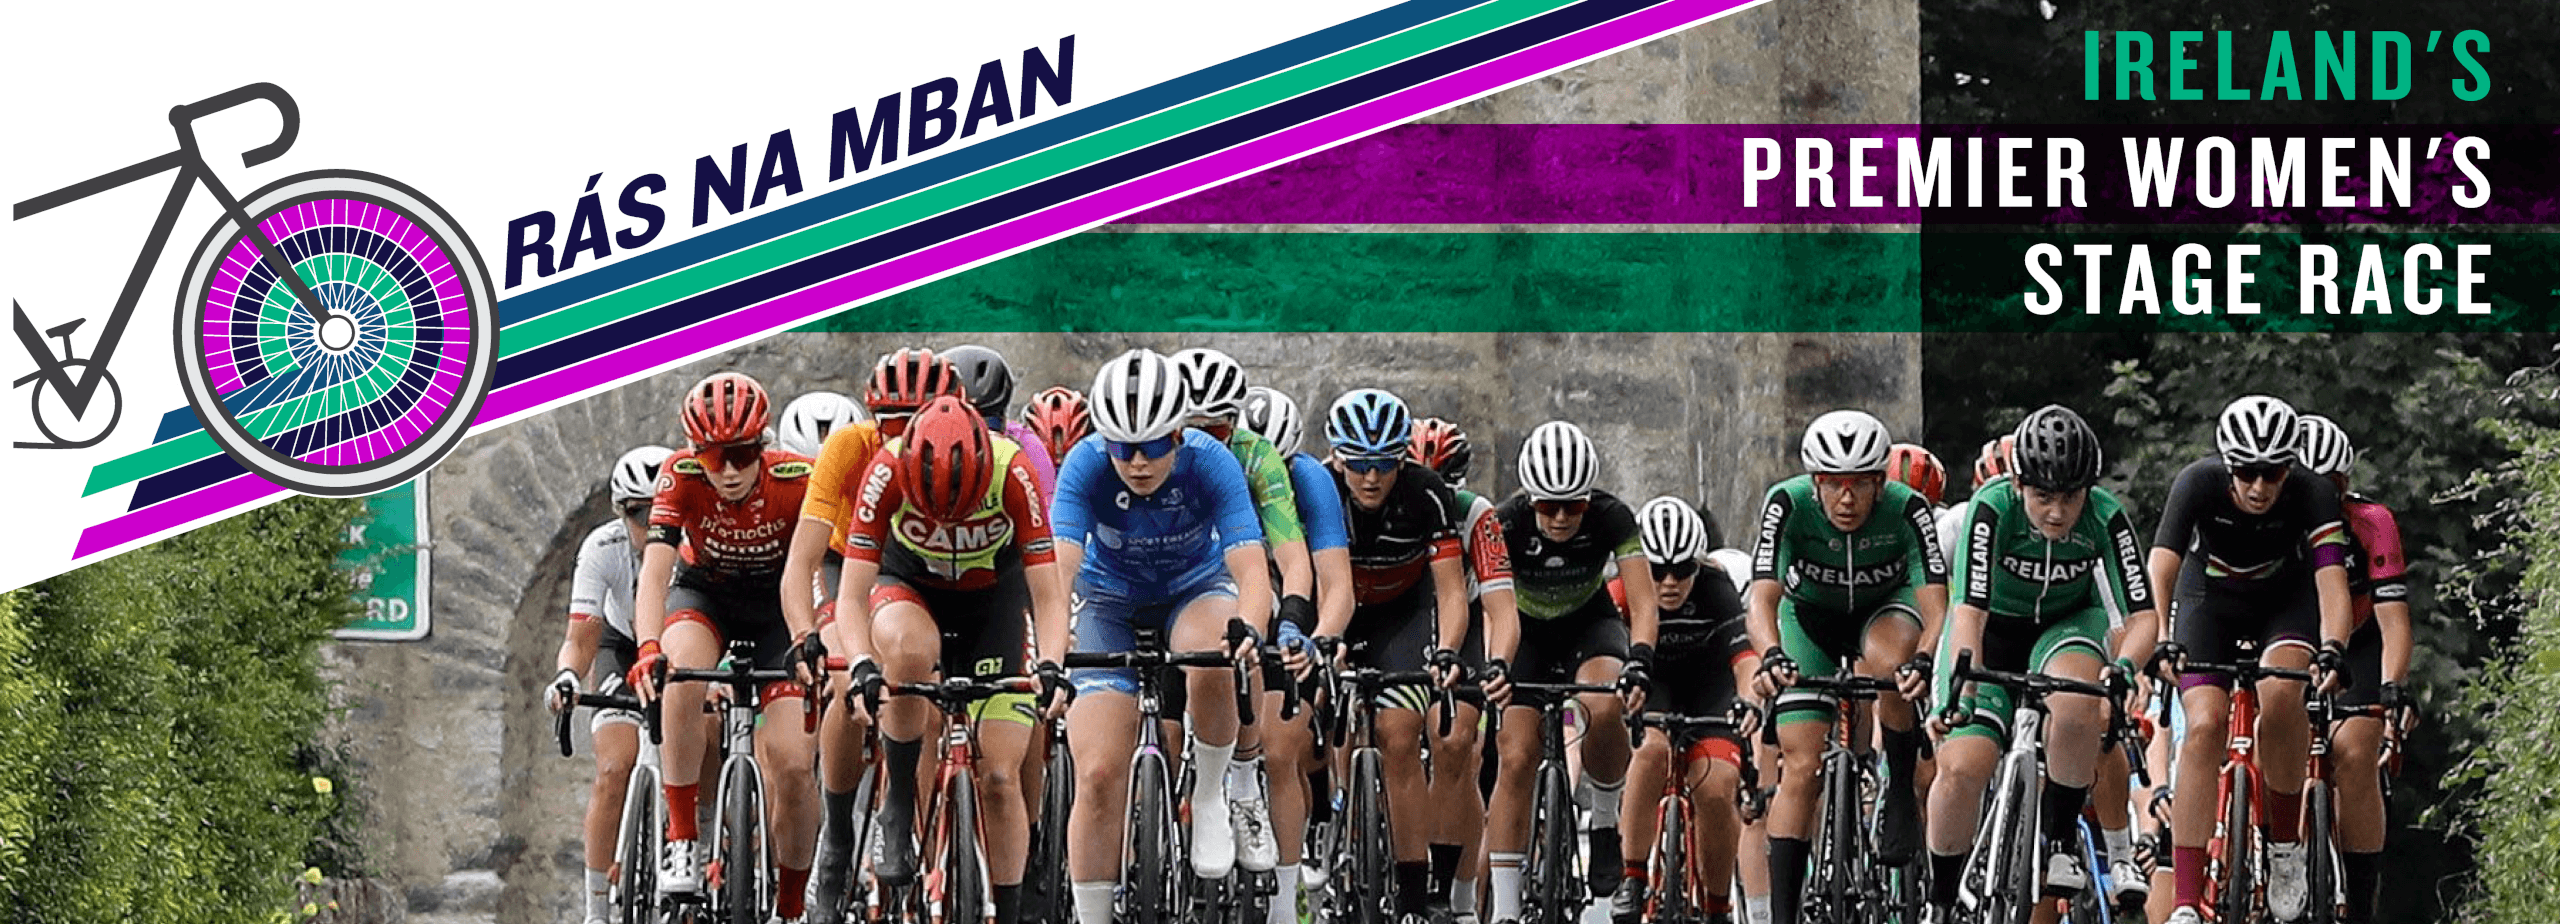 Rás na mBan - Ireland's premier women's stage race